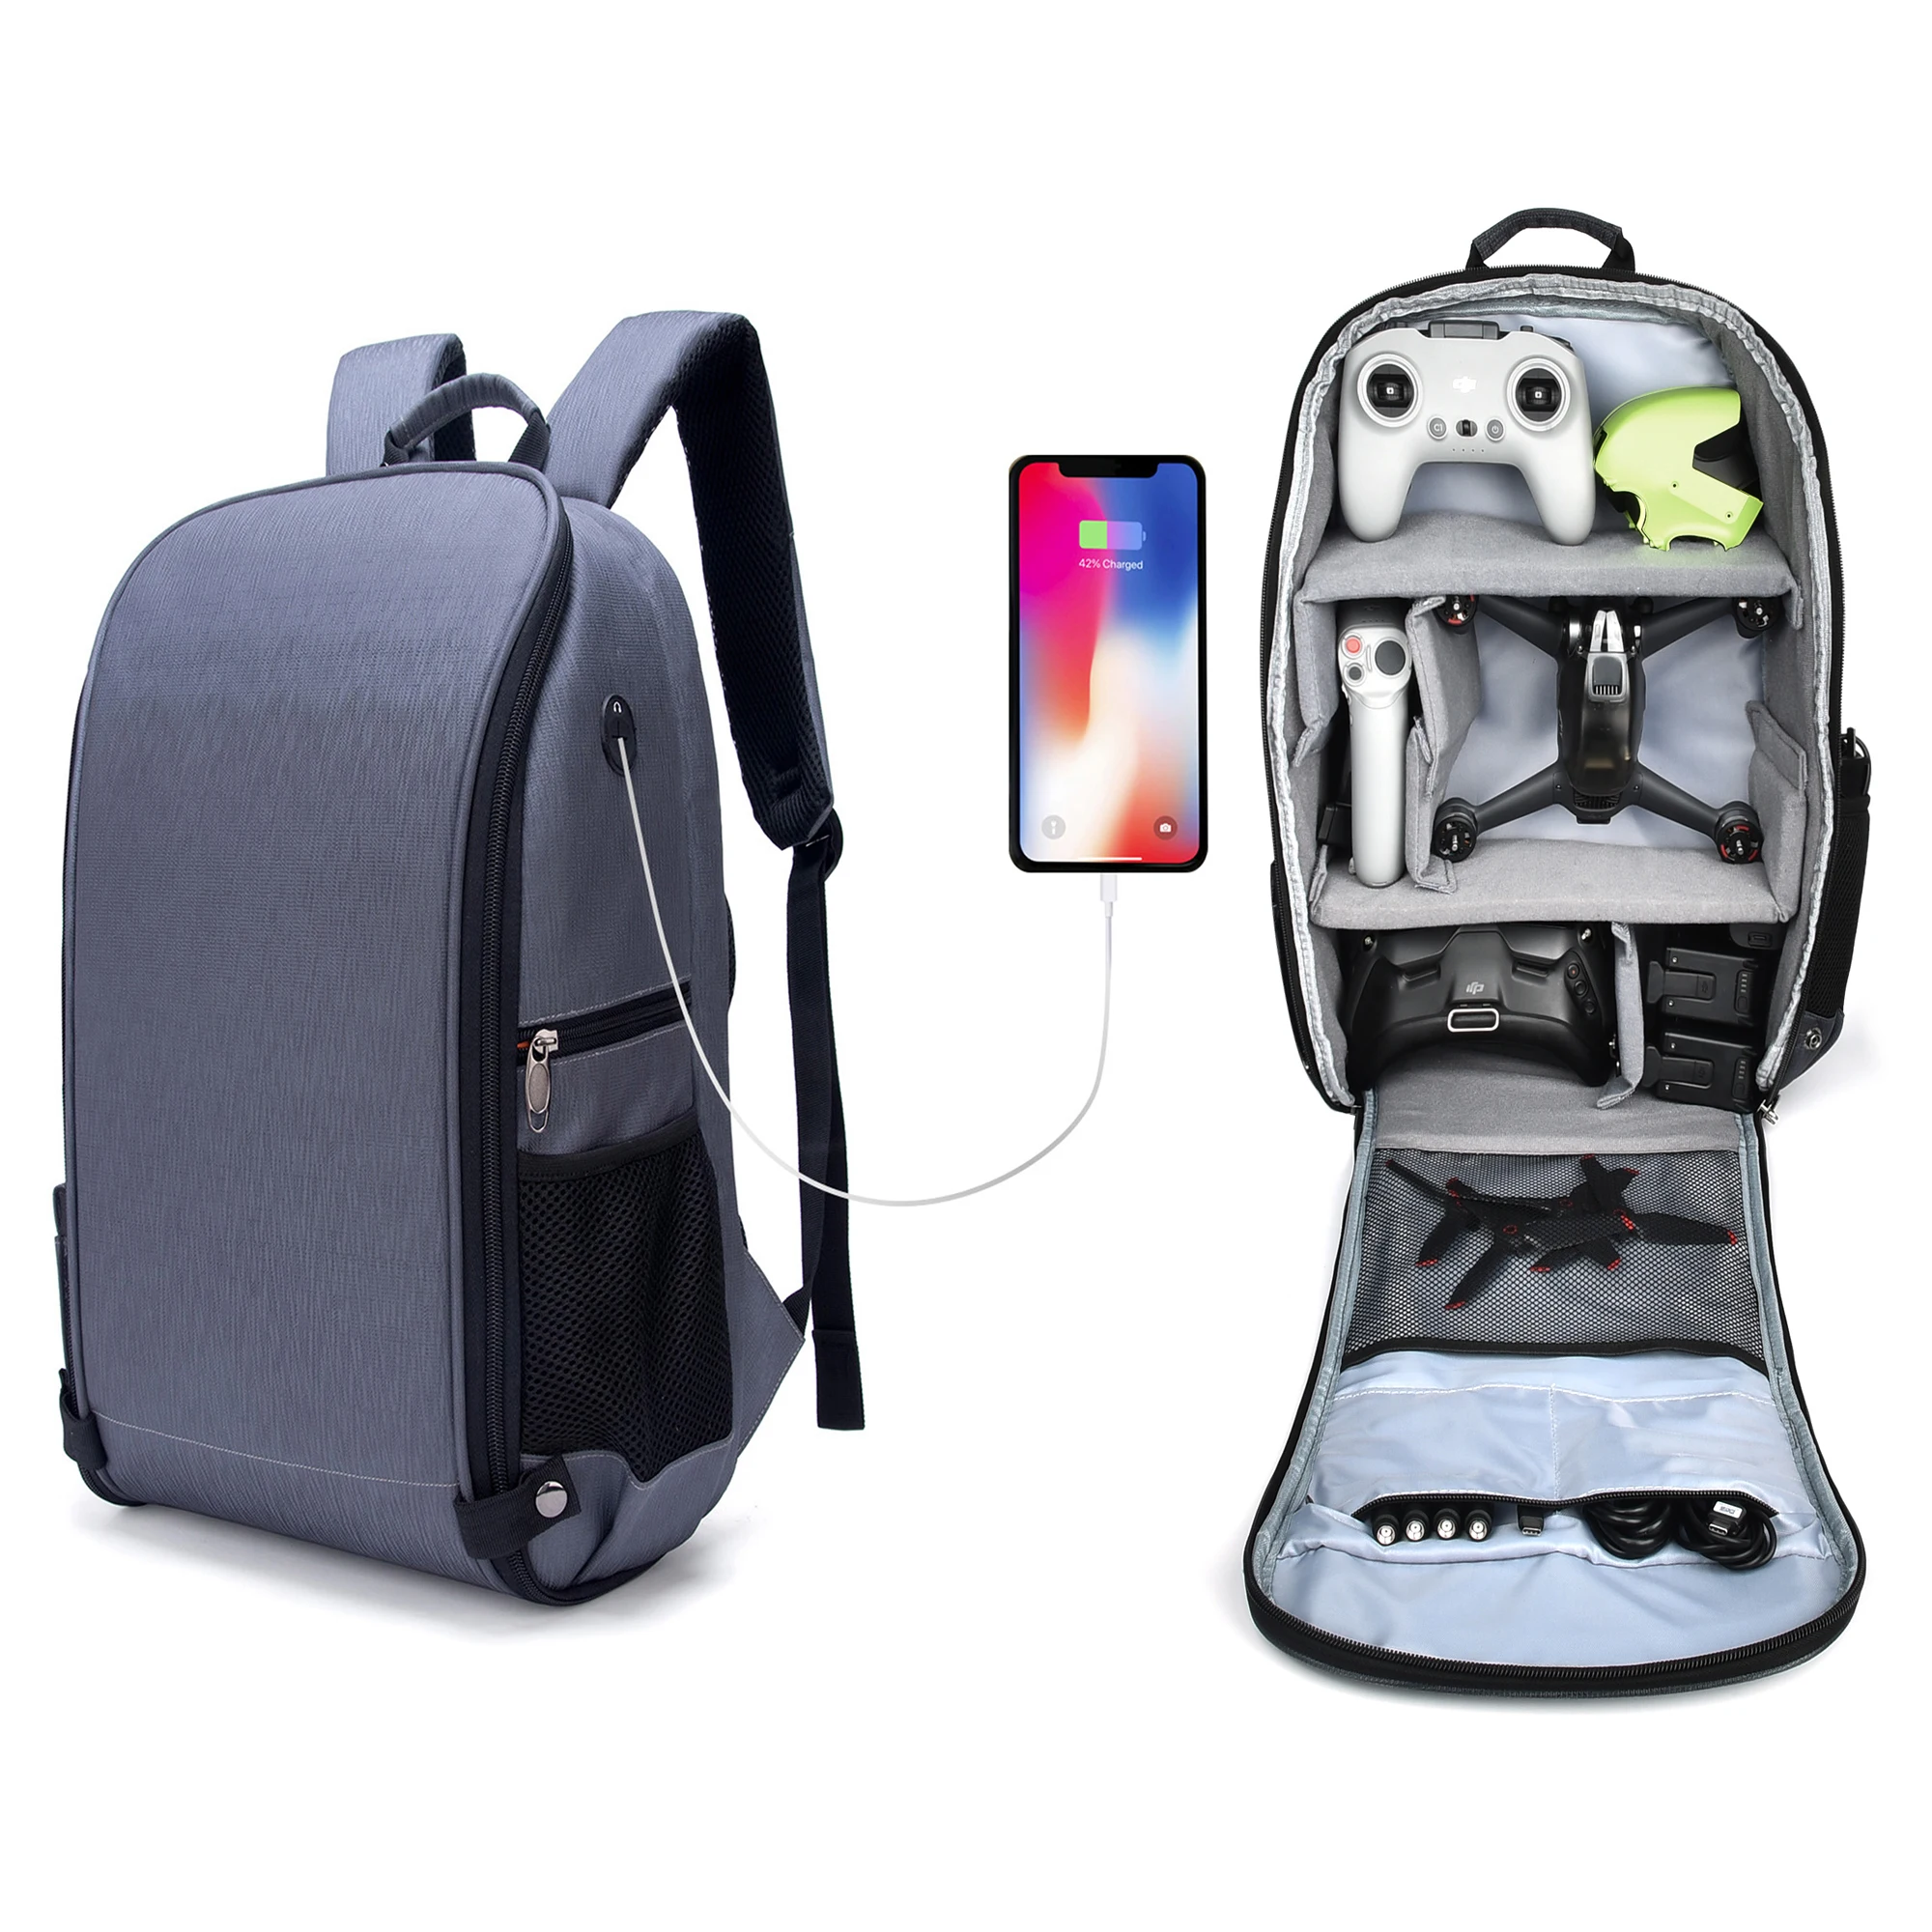 DJI FPV Backpack Portable Waterproof Storage Bag Outdoor Shoulder Bag for DJI FPV Drone Remote Controller V2 Goggles Accessories